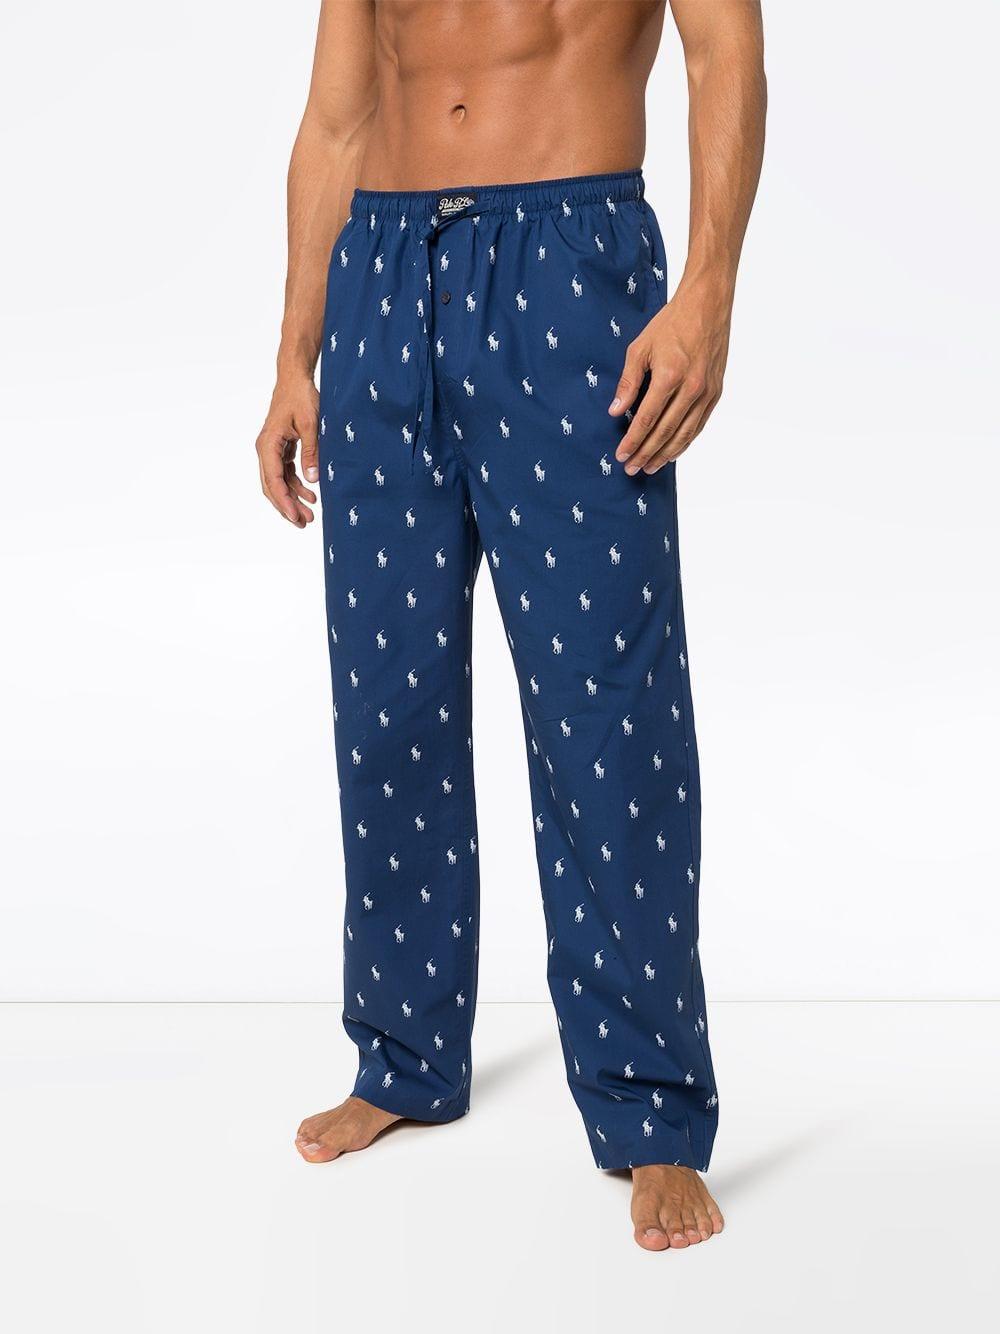 Pyjama Ralph Lauren Flash Sales, 55% OFF | www.cernebrasil.com